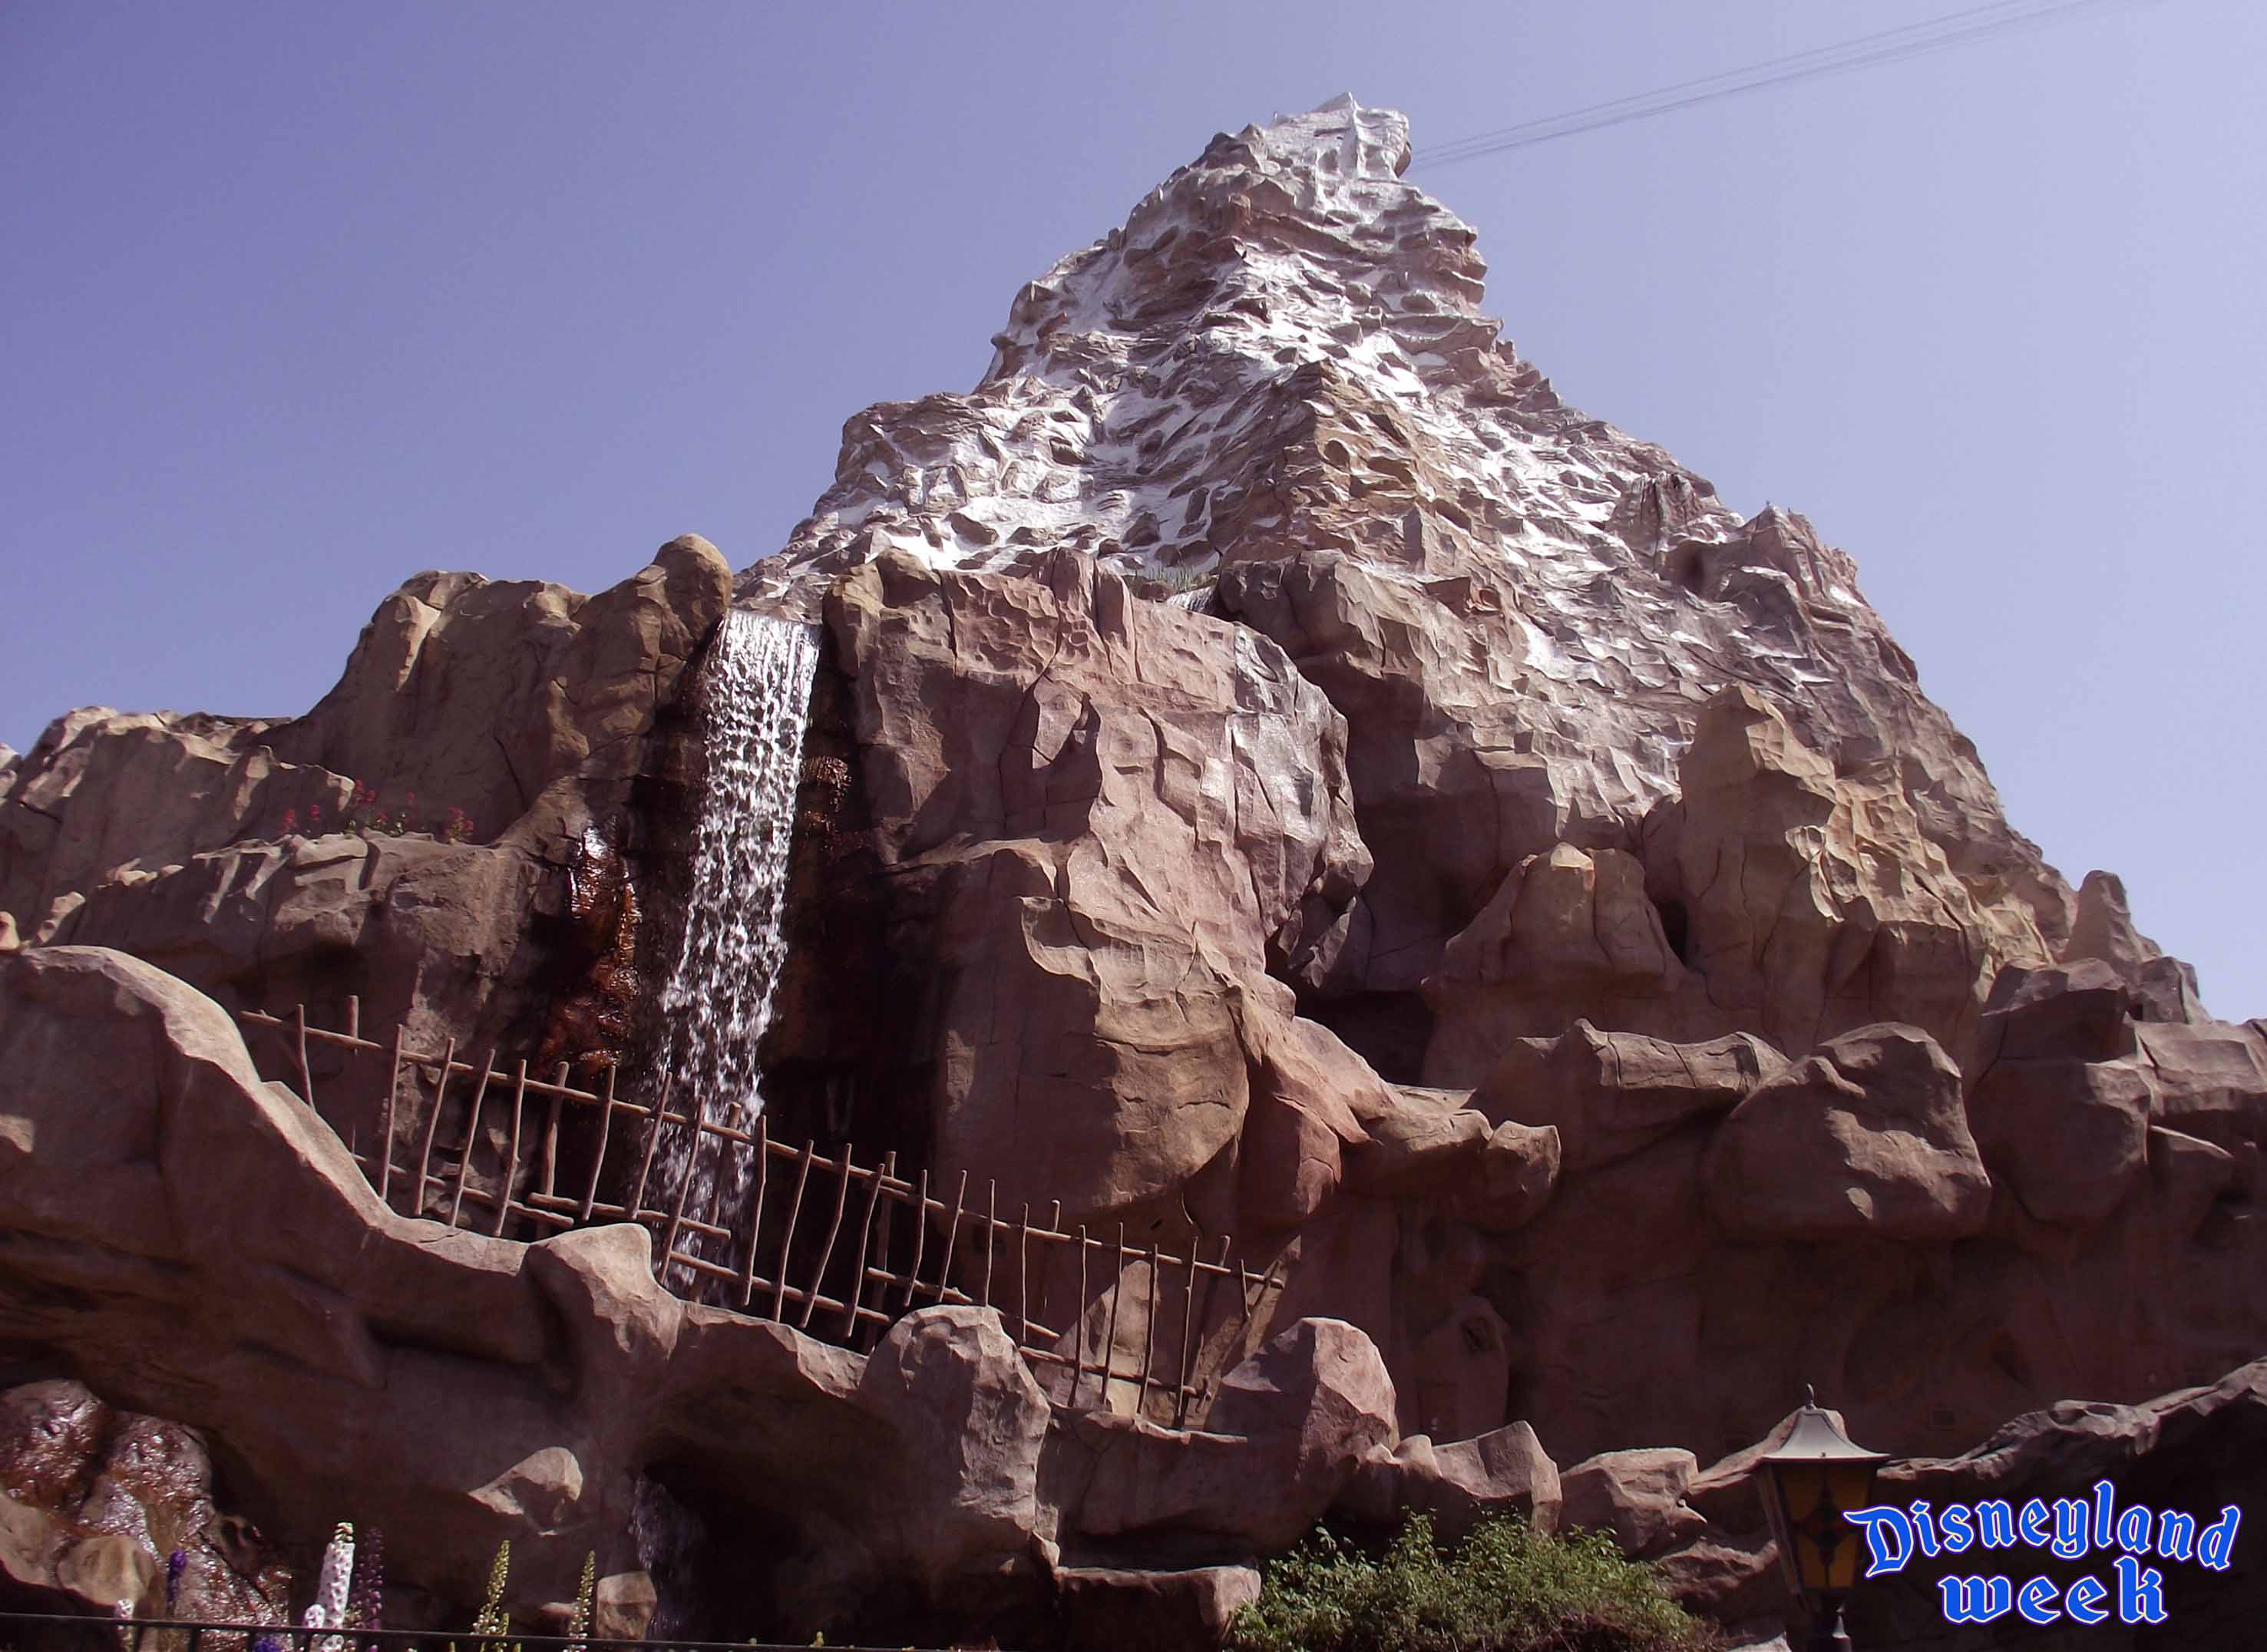 Disneyland Week   Matterhorn Bobsleds Ride Along   WDW Parkhoppers